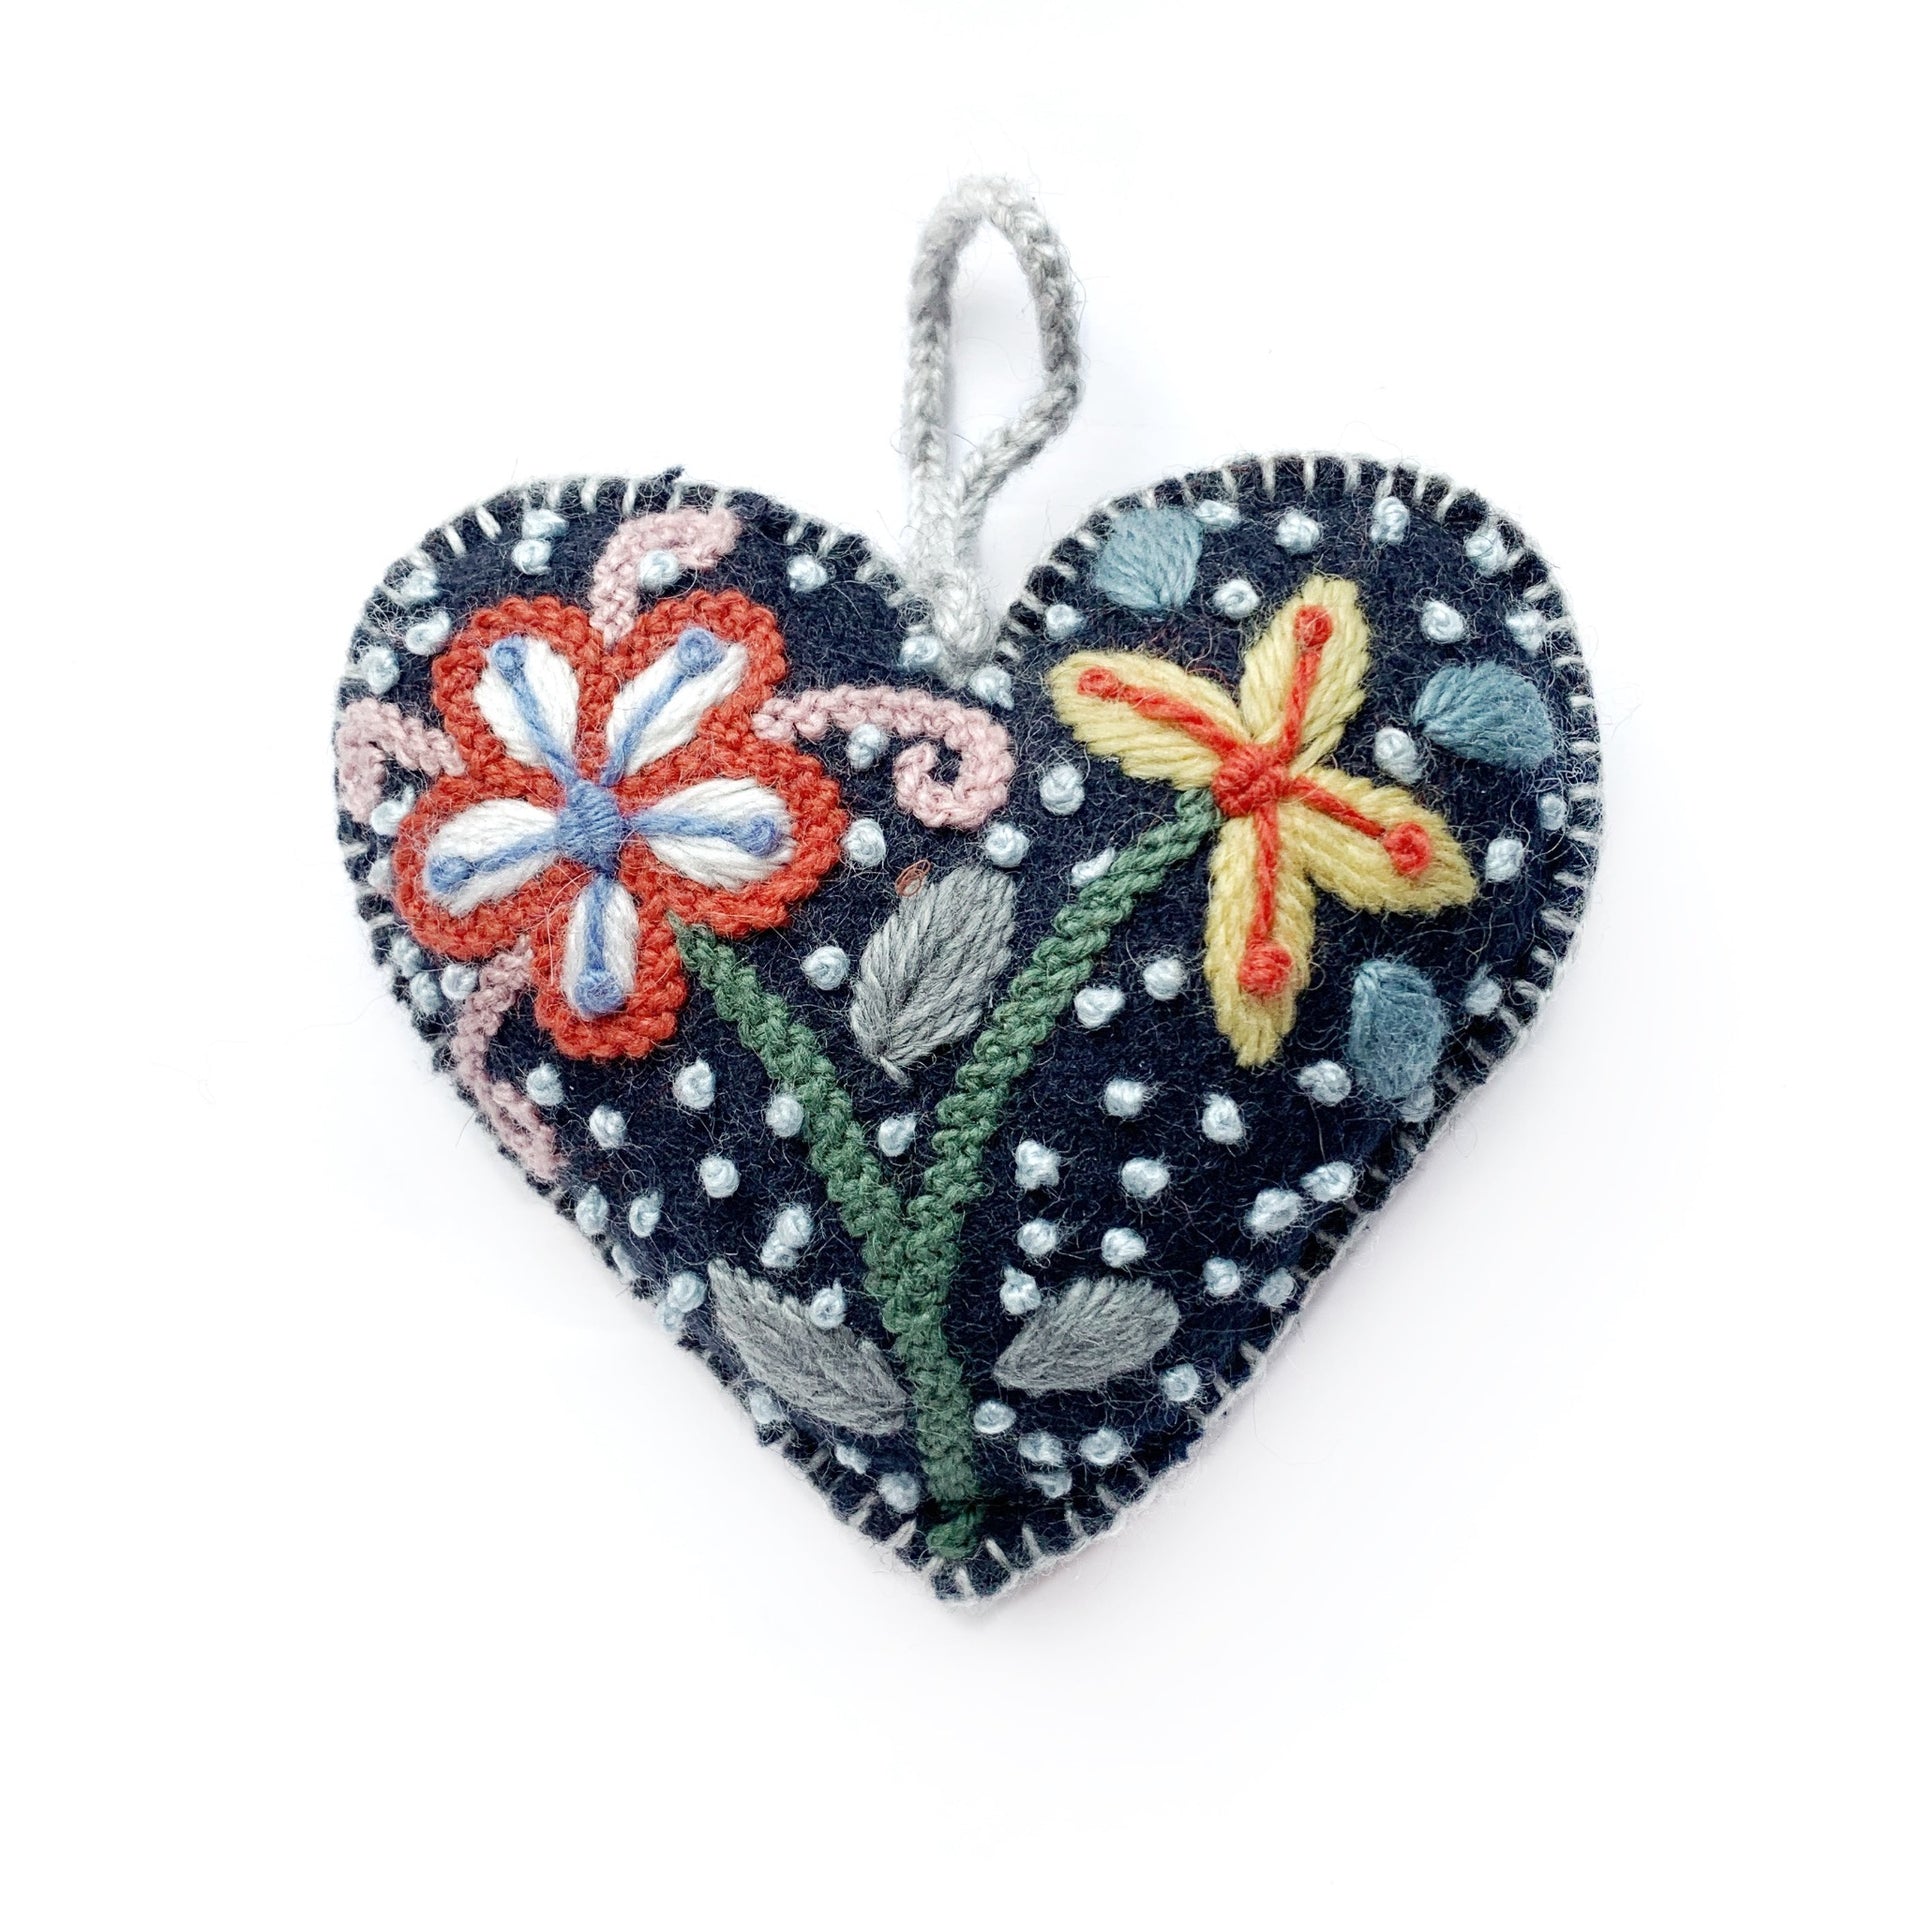 Handmade Heart Christmas Ornament, Fair Trade Embroidered